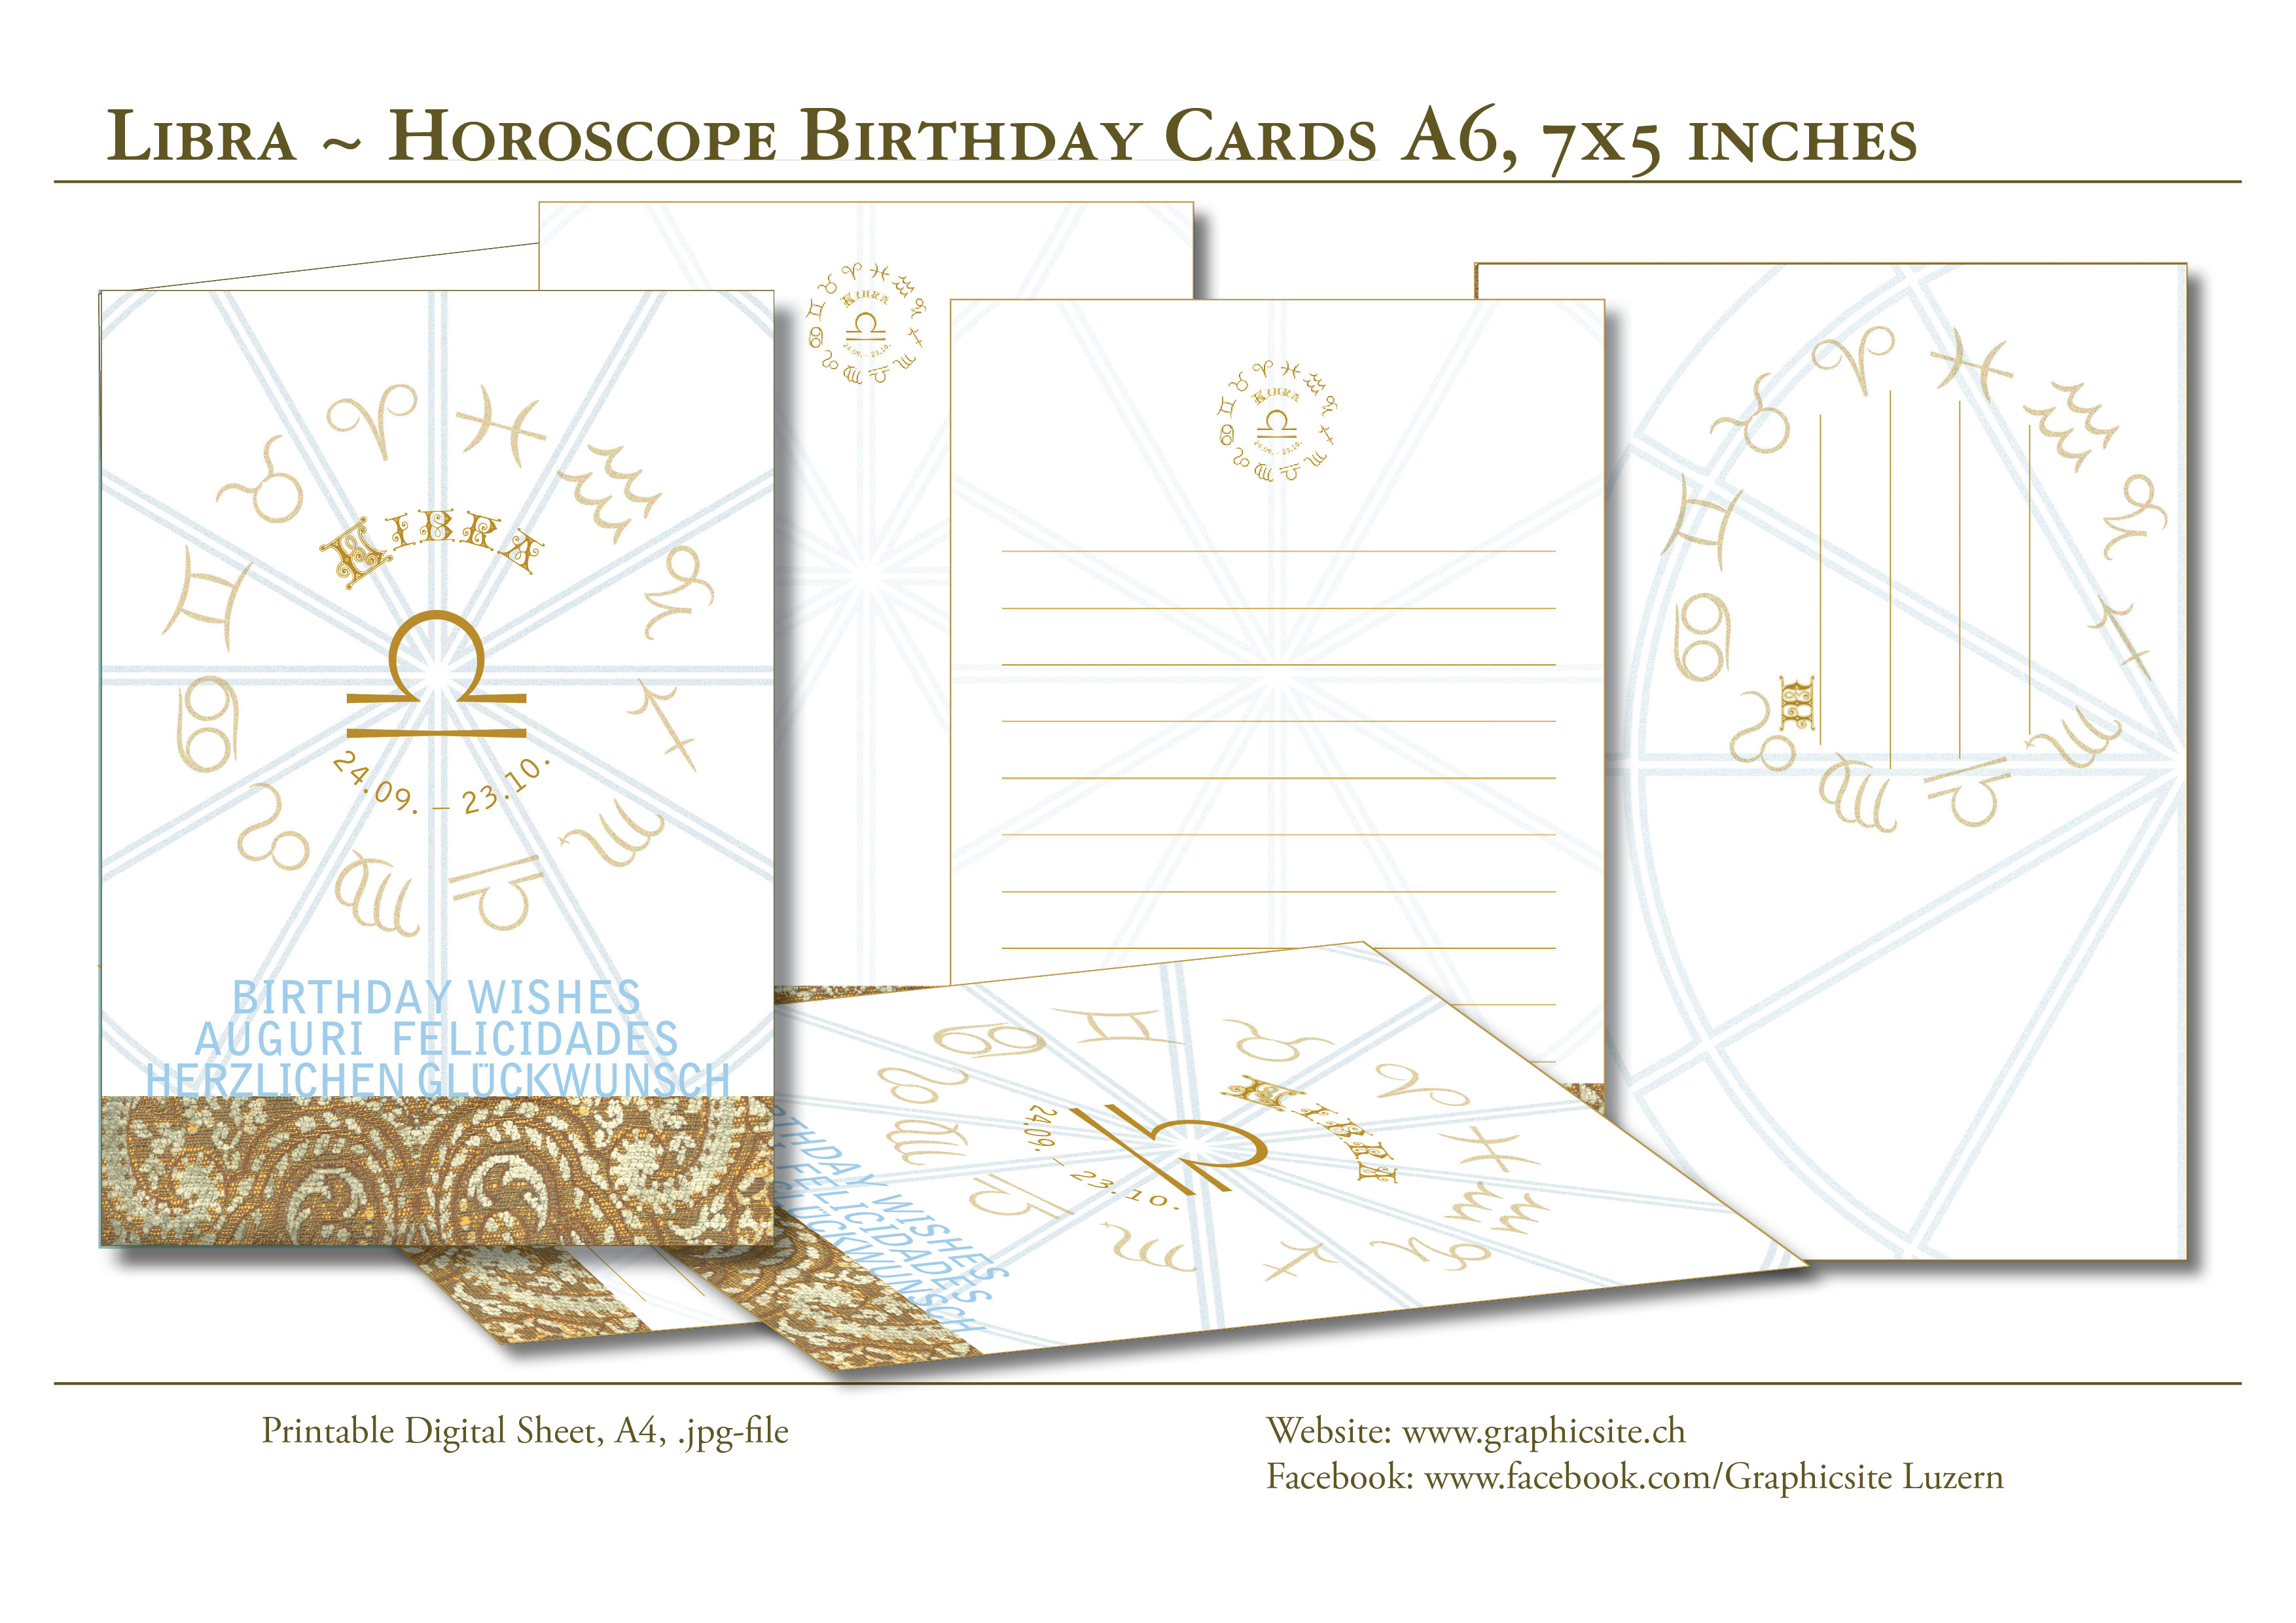 Printable Digital Sheets - Birthday Card Collection - Horoscope - Zodiac - Libra A6 - GraphicDesign, Luzern